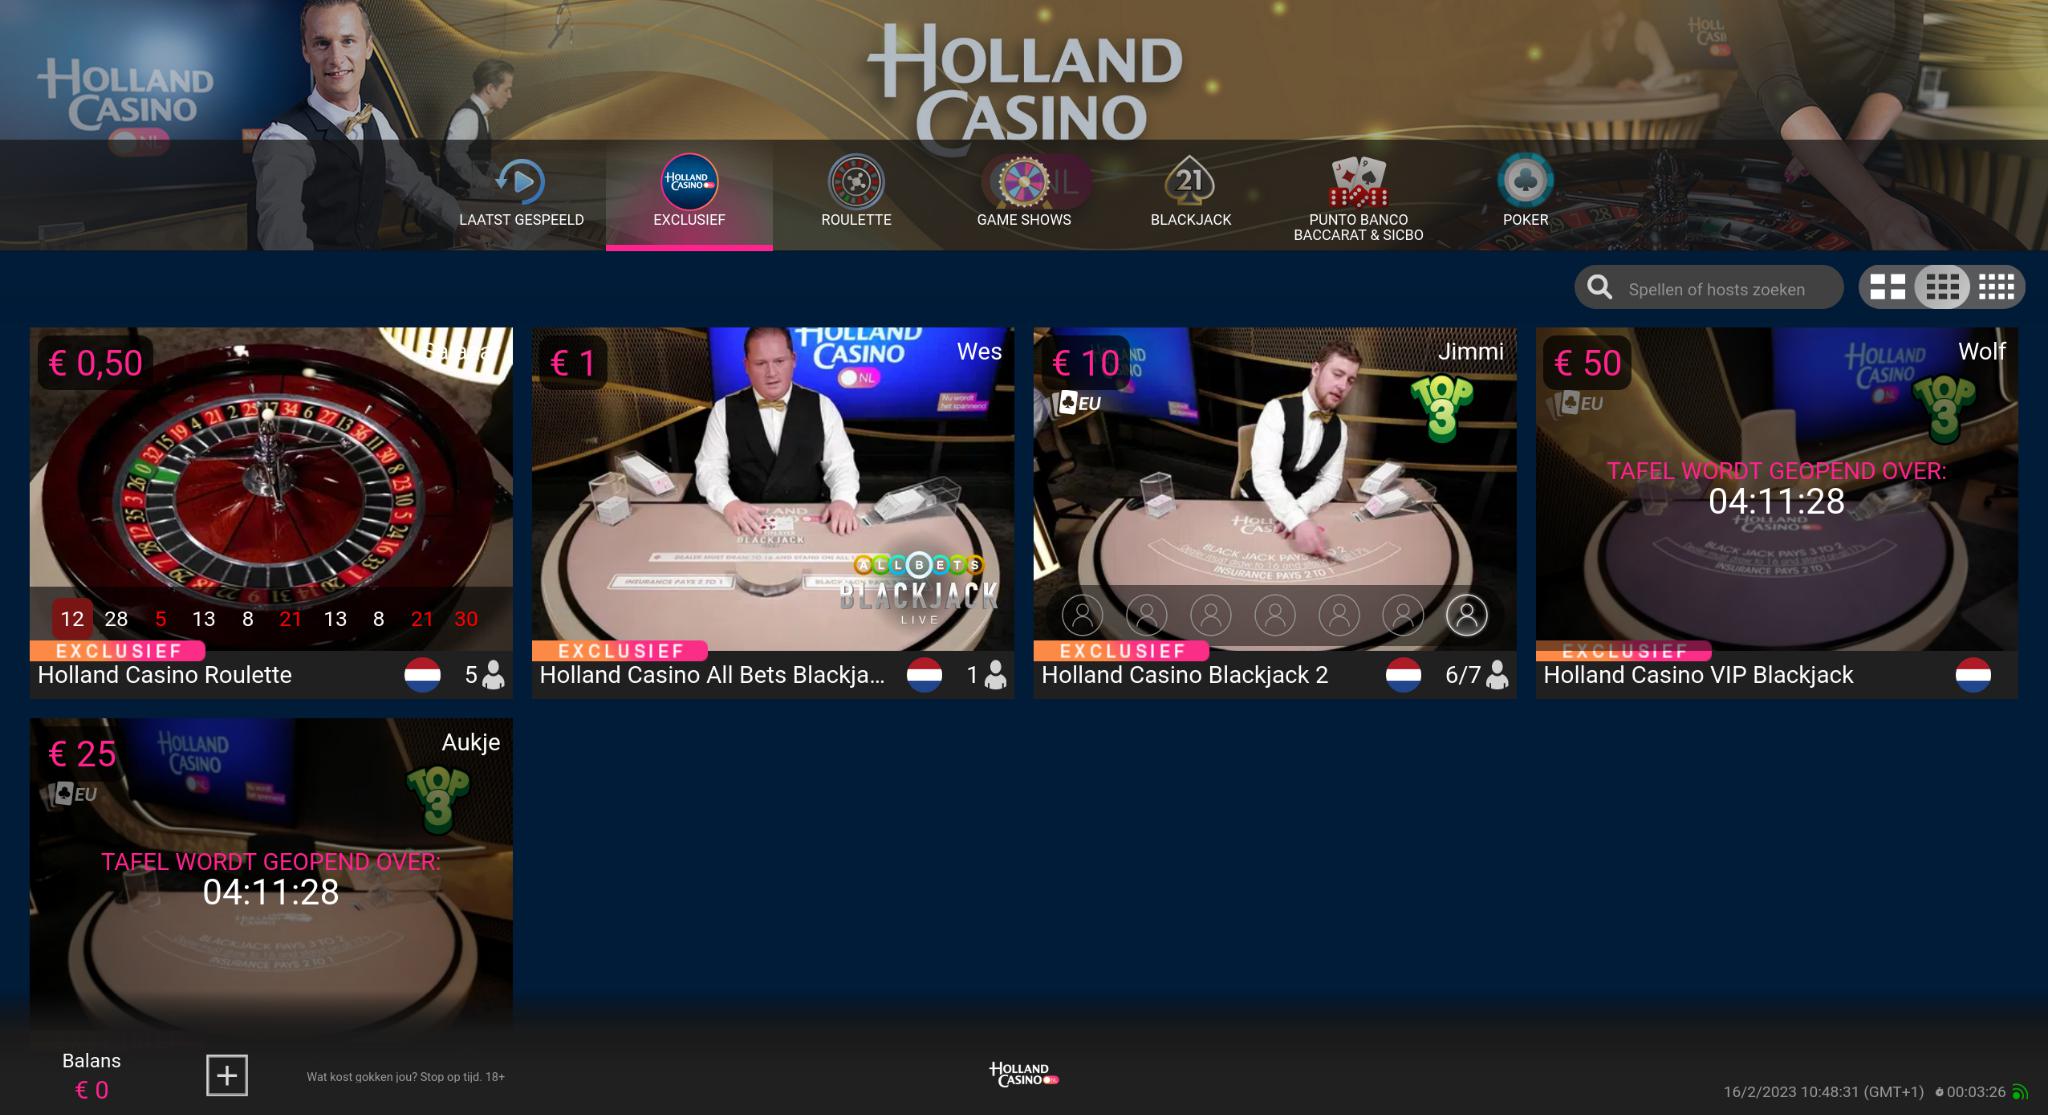 Holland Casino Lobby